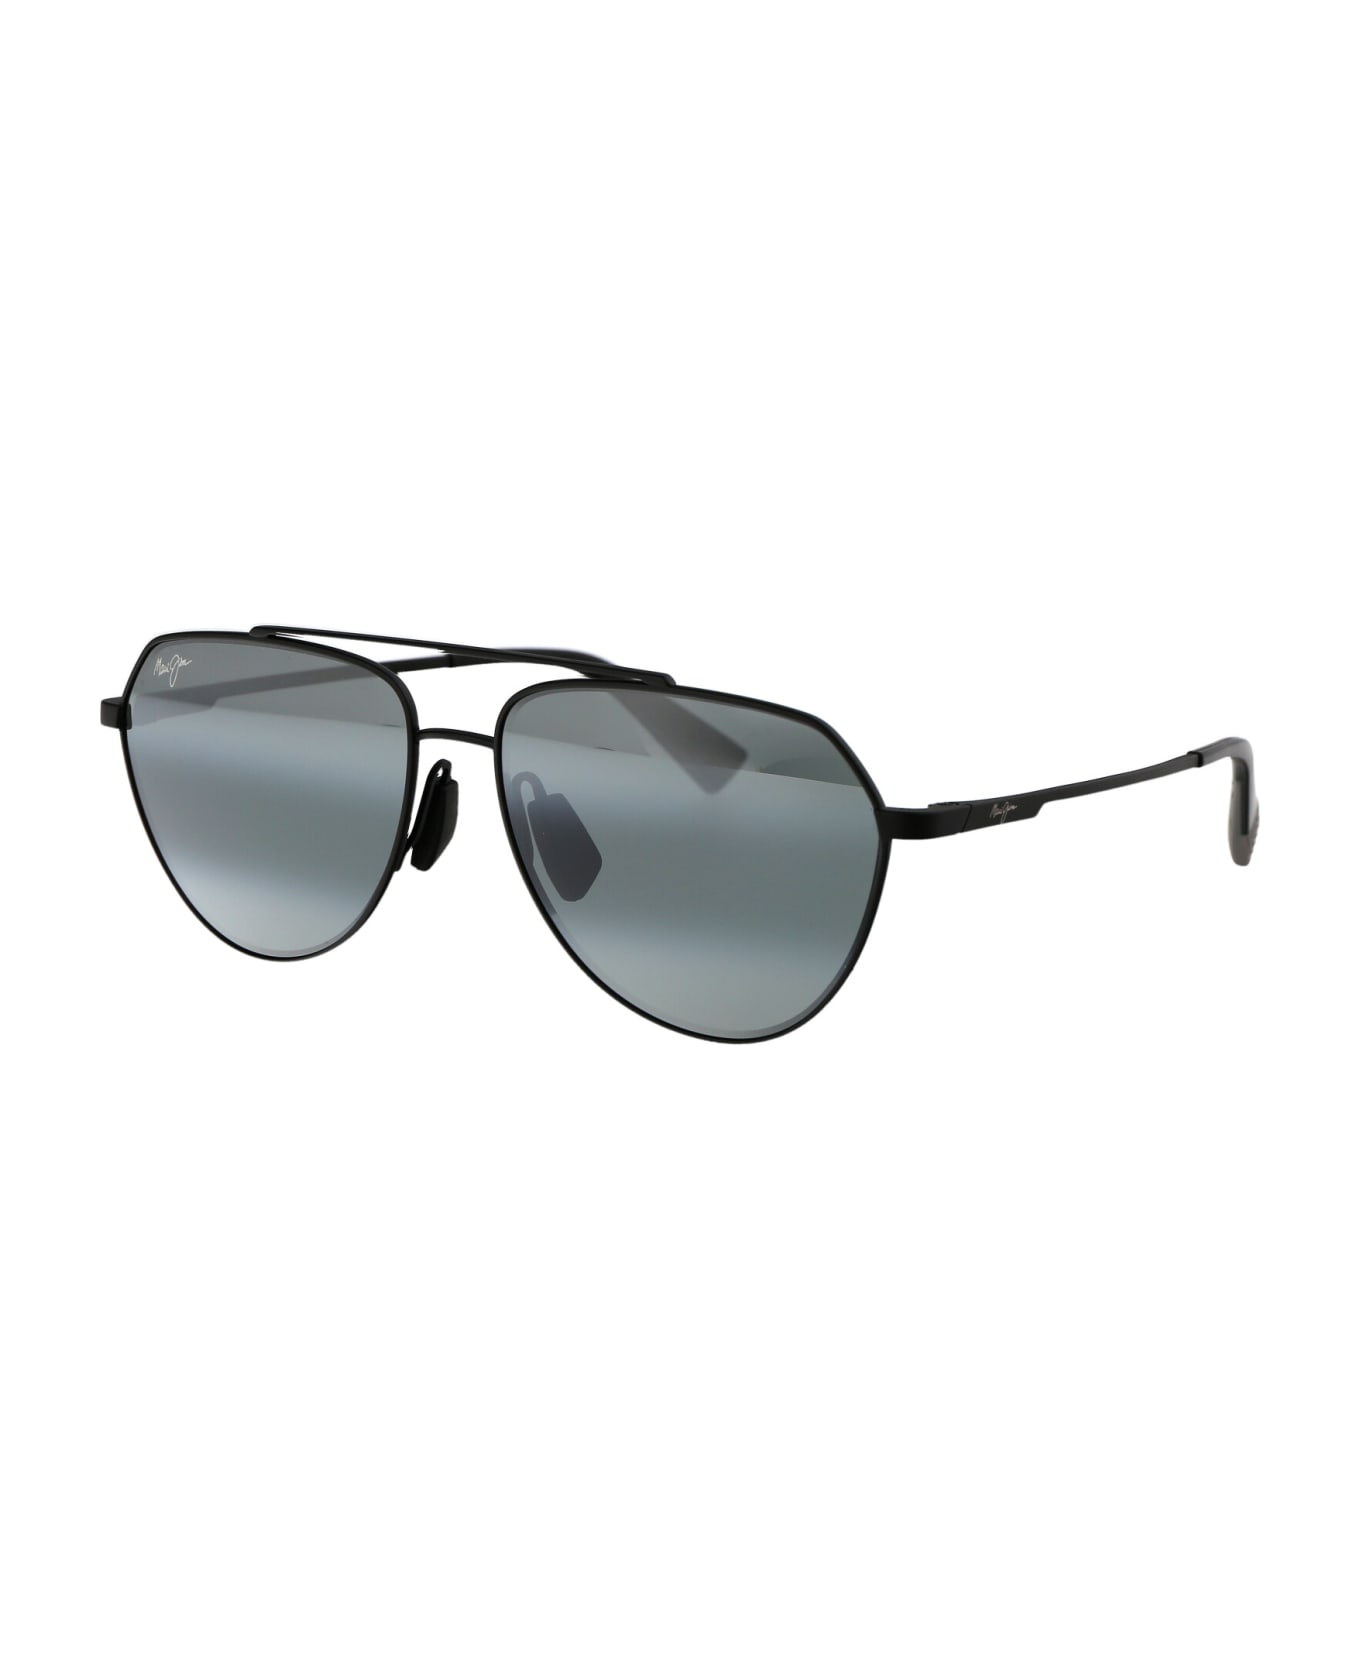 Maui Jim Waiwai Sunglasses - 02 GREY WAIWAI MATTE BLACK W/ GREY サングラス